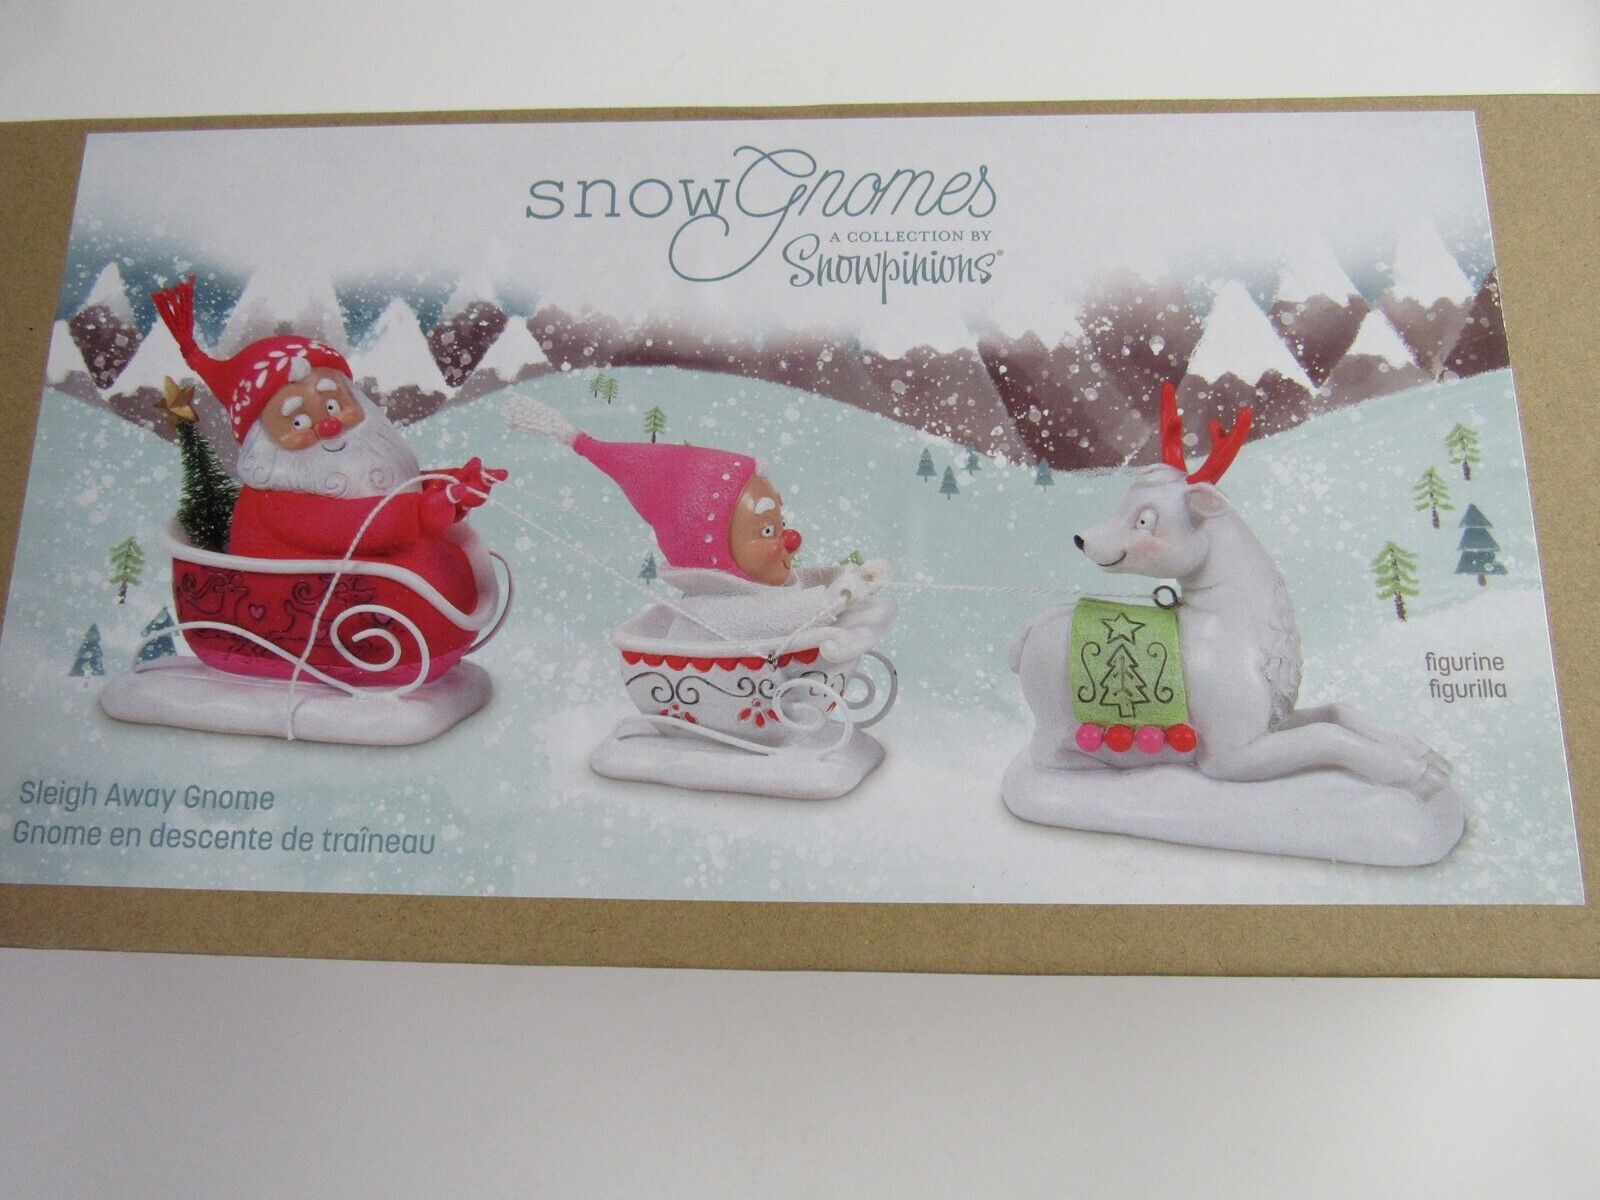 Dept 56 Snowpinions SLEIGH AWAY GNOME Snow Gnome Figurine 600357 New in Box 